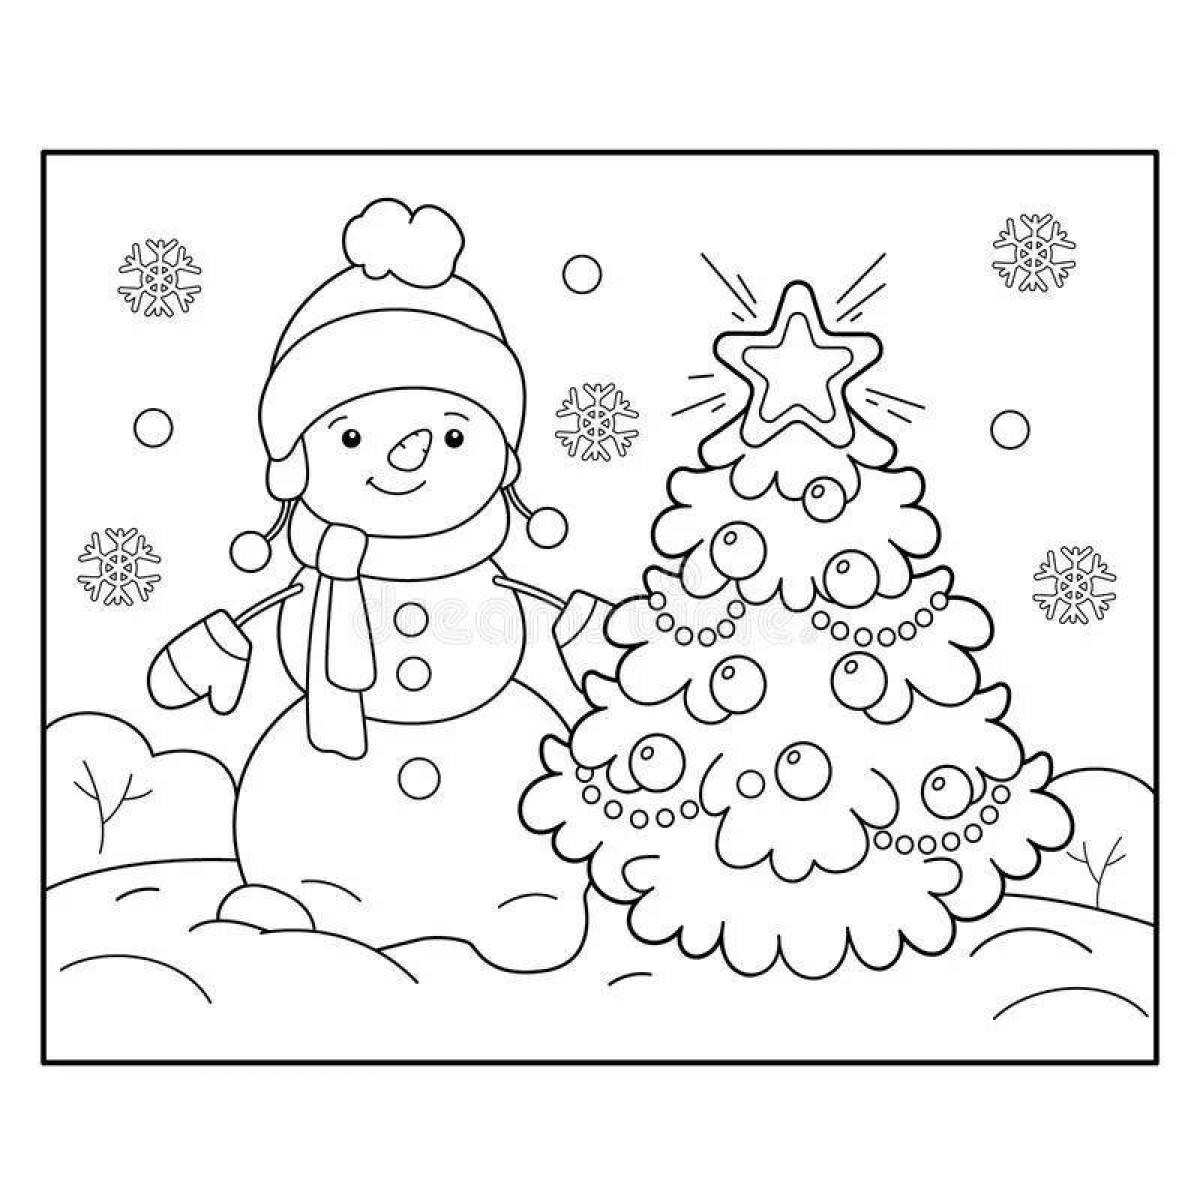 Adorable snowman coloring page